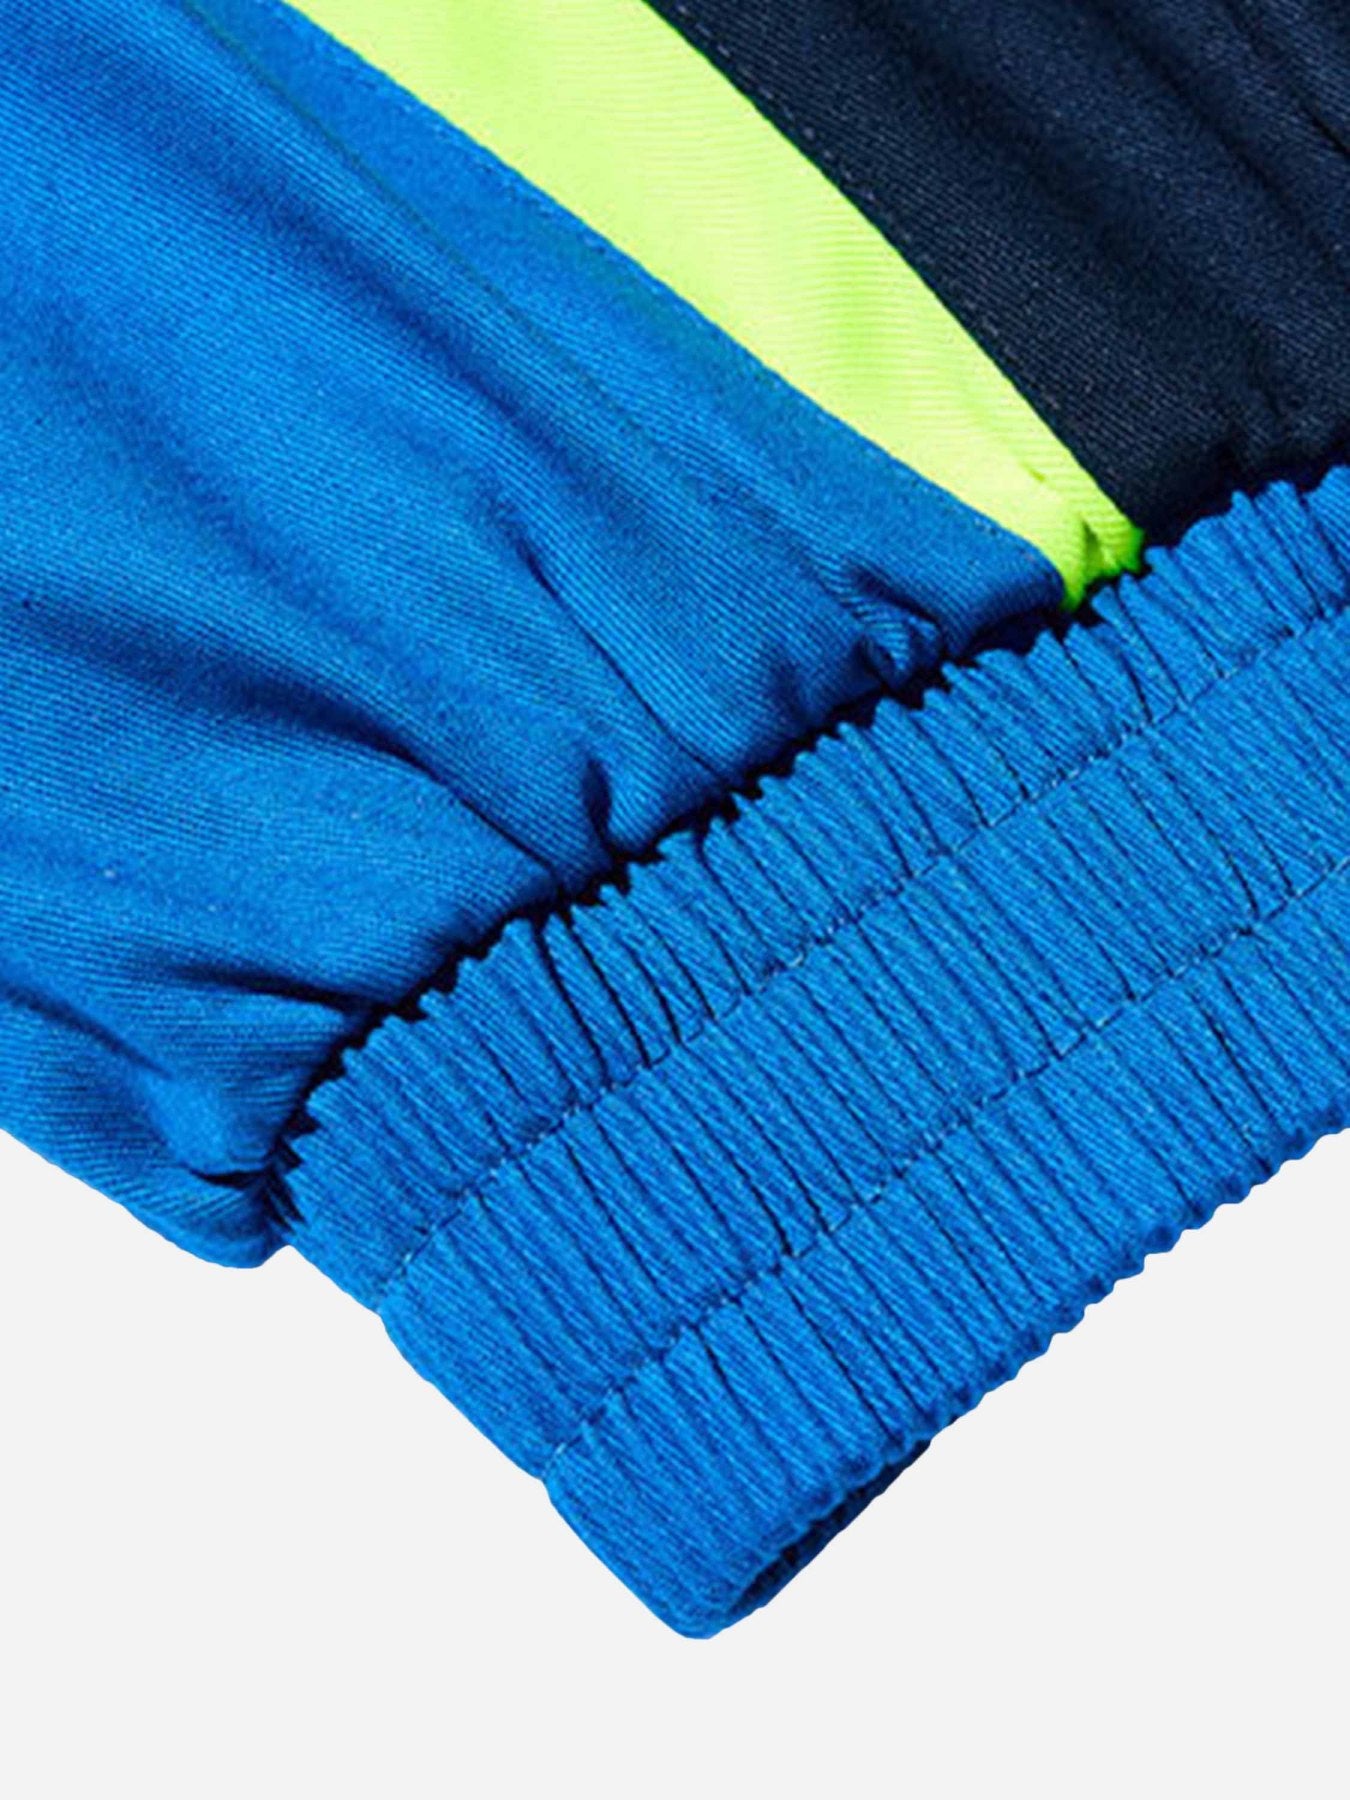 The Supermade Vintage Street Colorblock Hooded Jacket